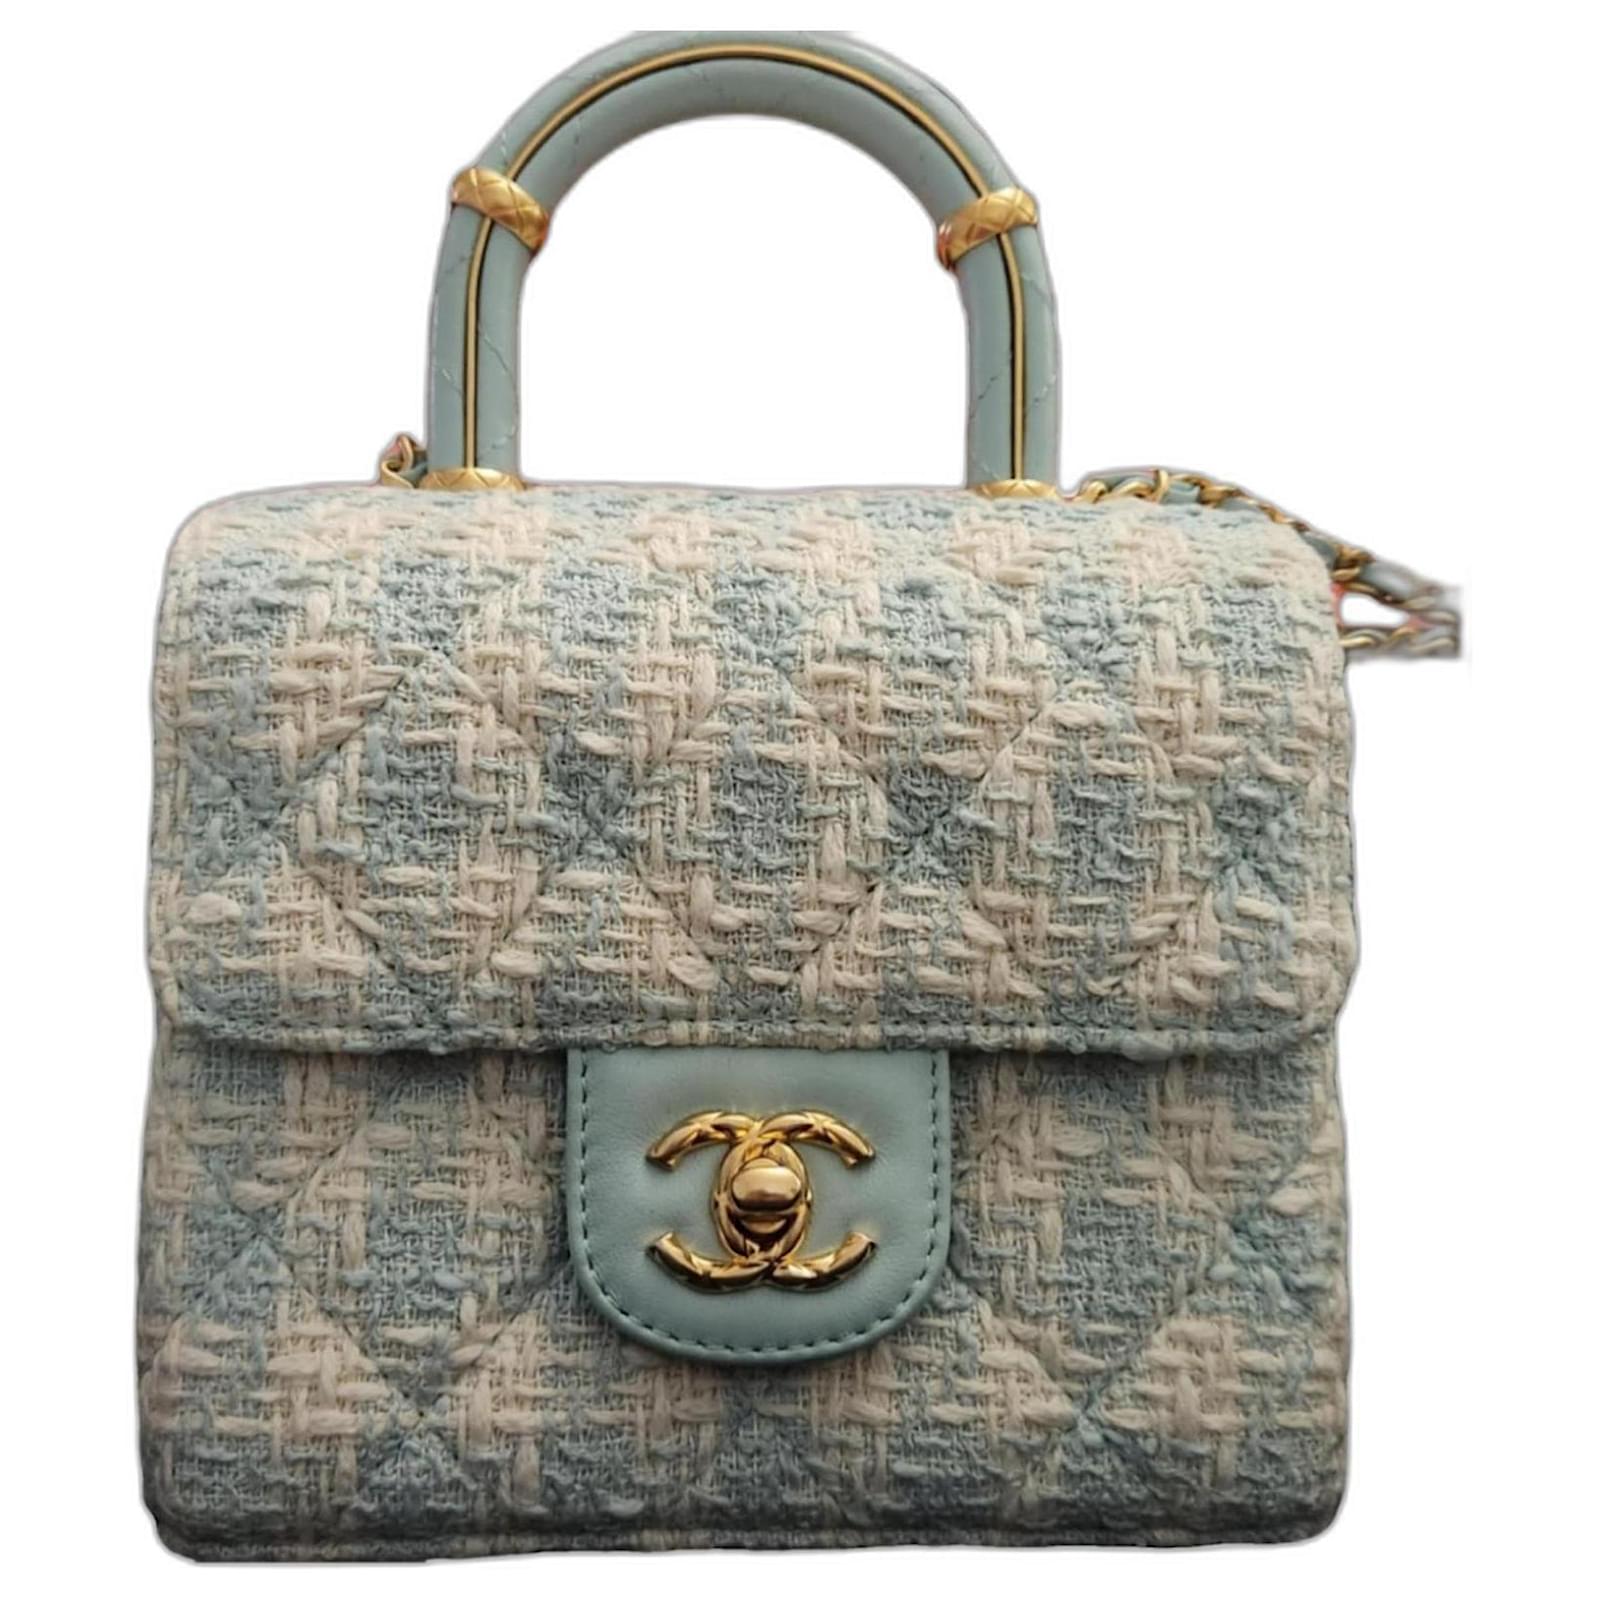 Gorgeous Chanel bag